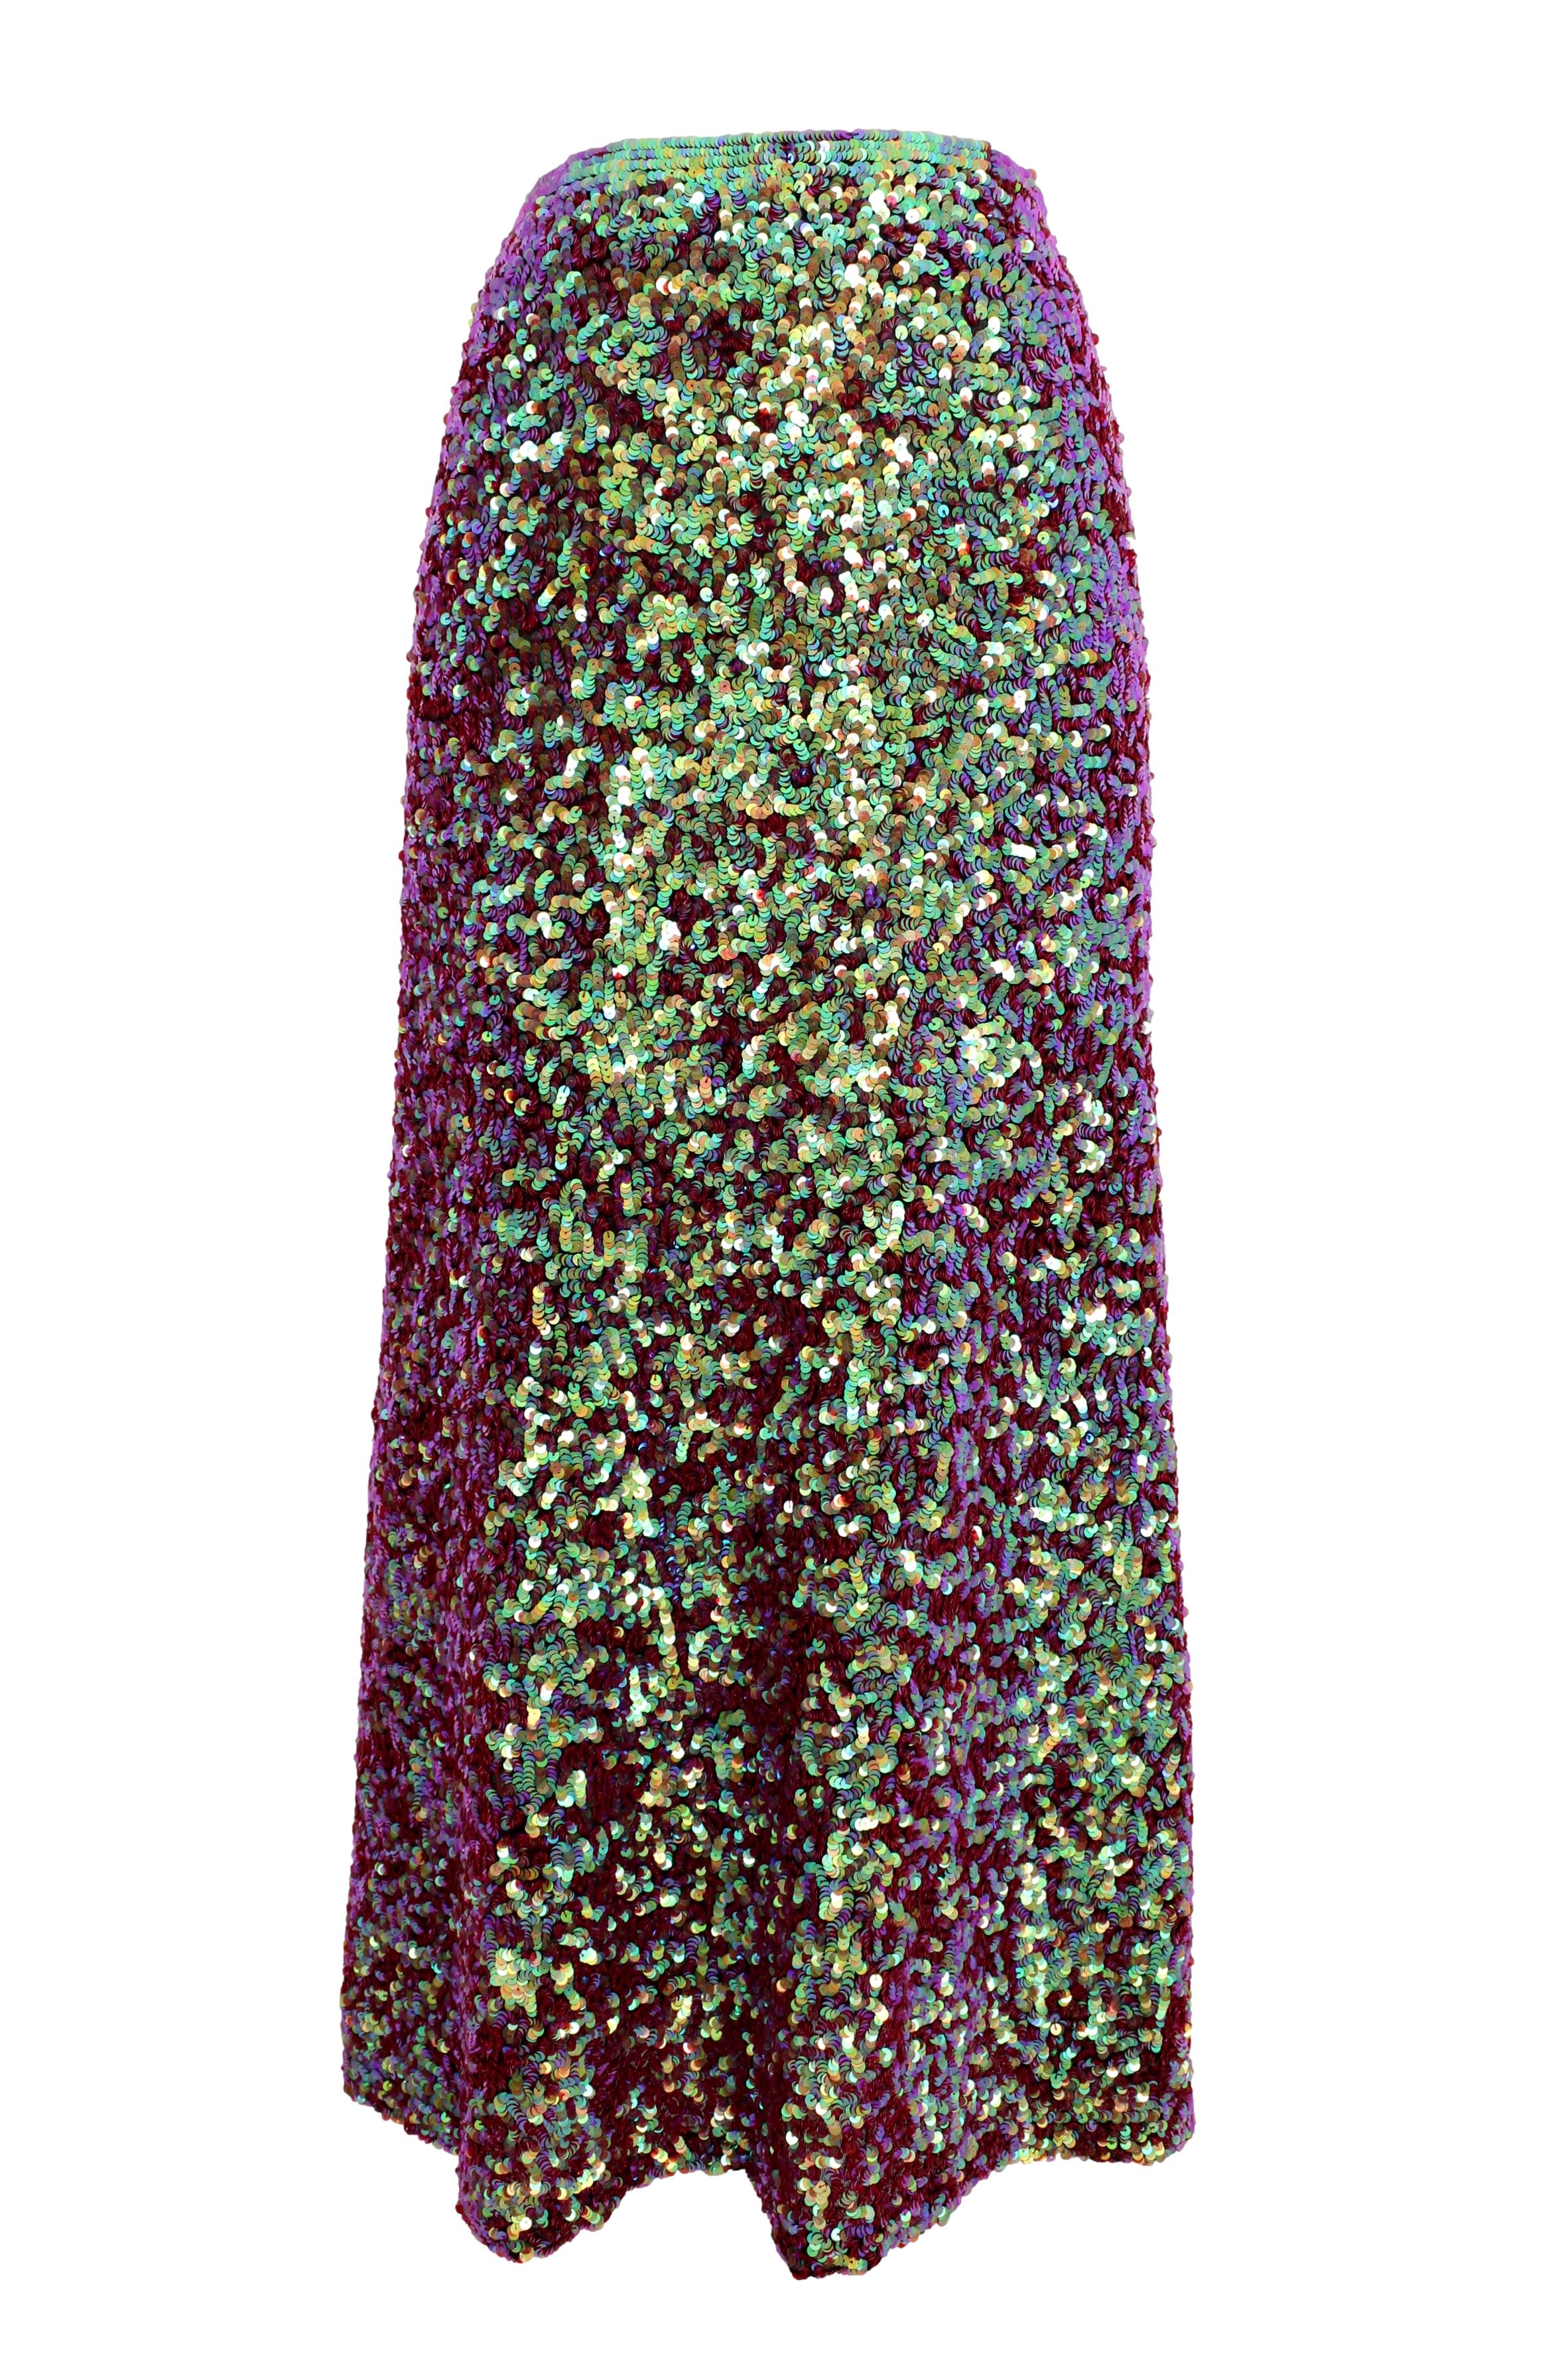 Jean Paul Gaultier Sequins Iridescent Multicolor Skirt Suit Cocktail Dress 1990s 4